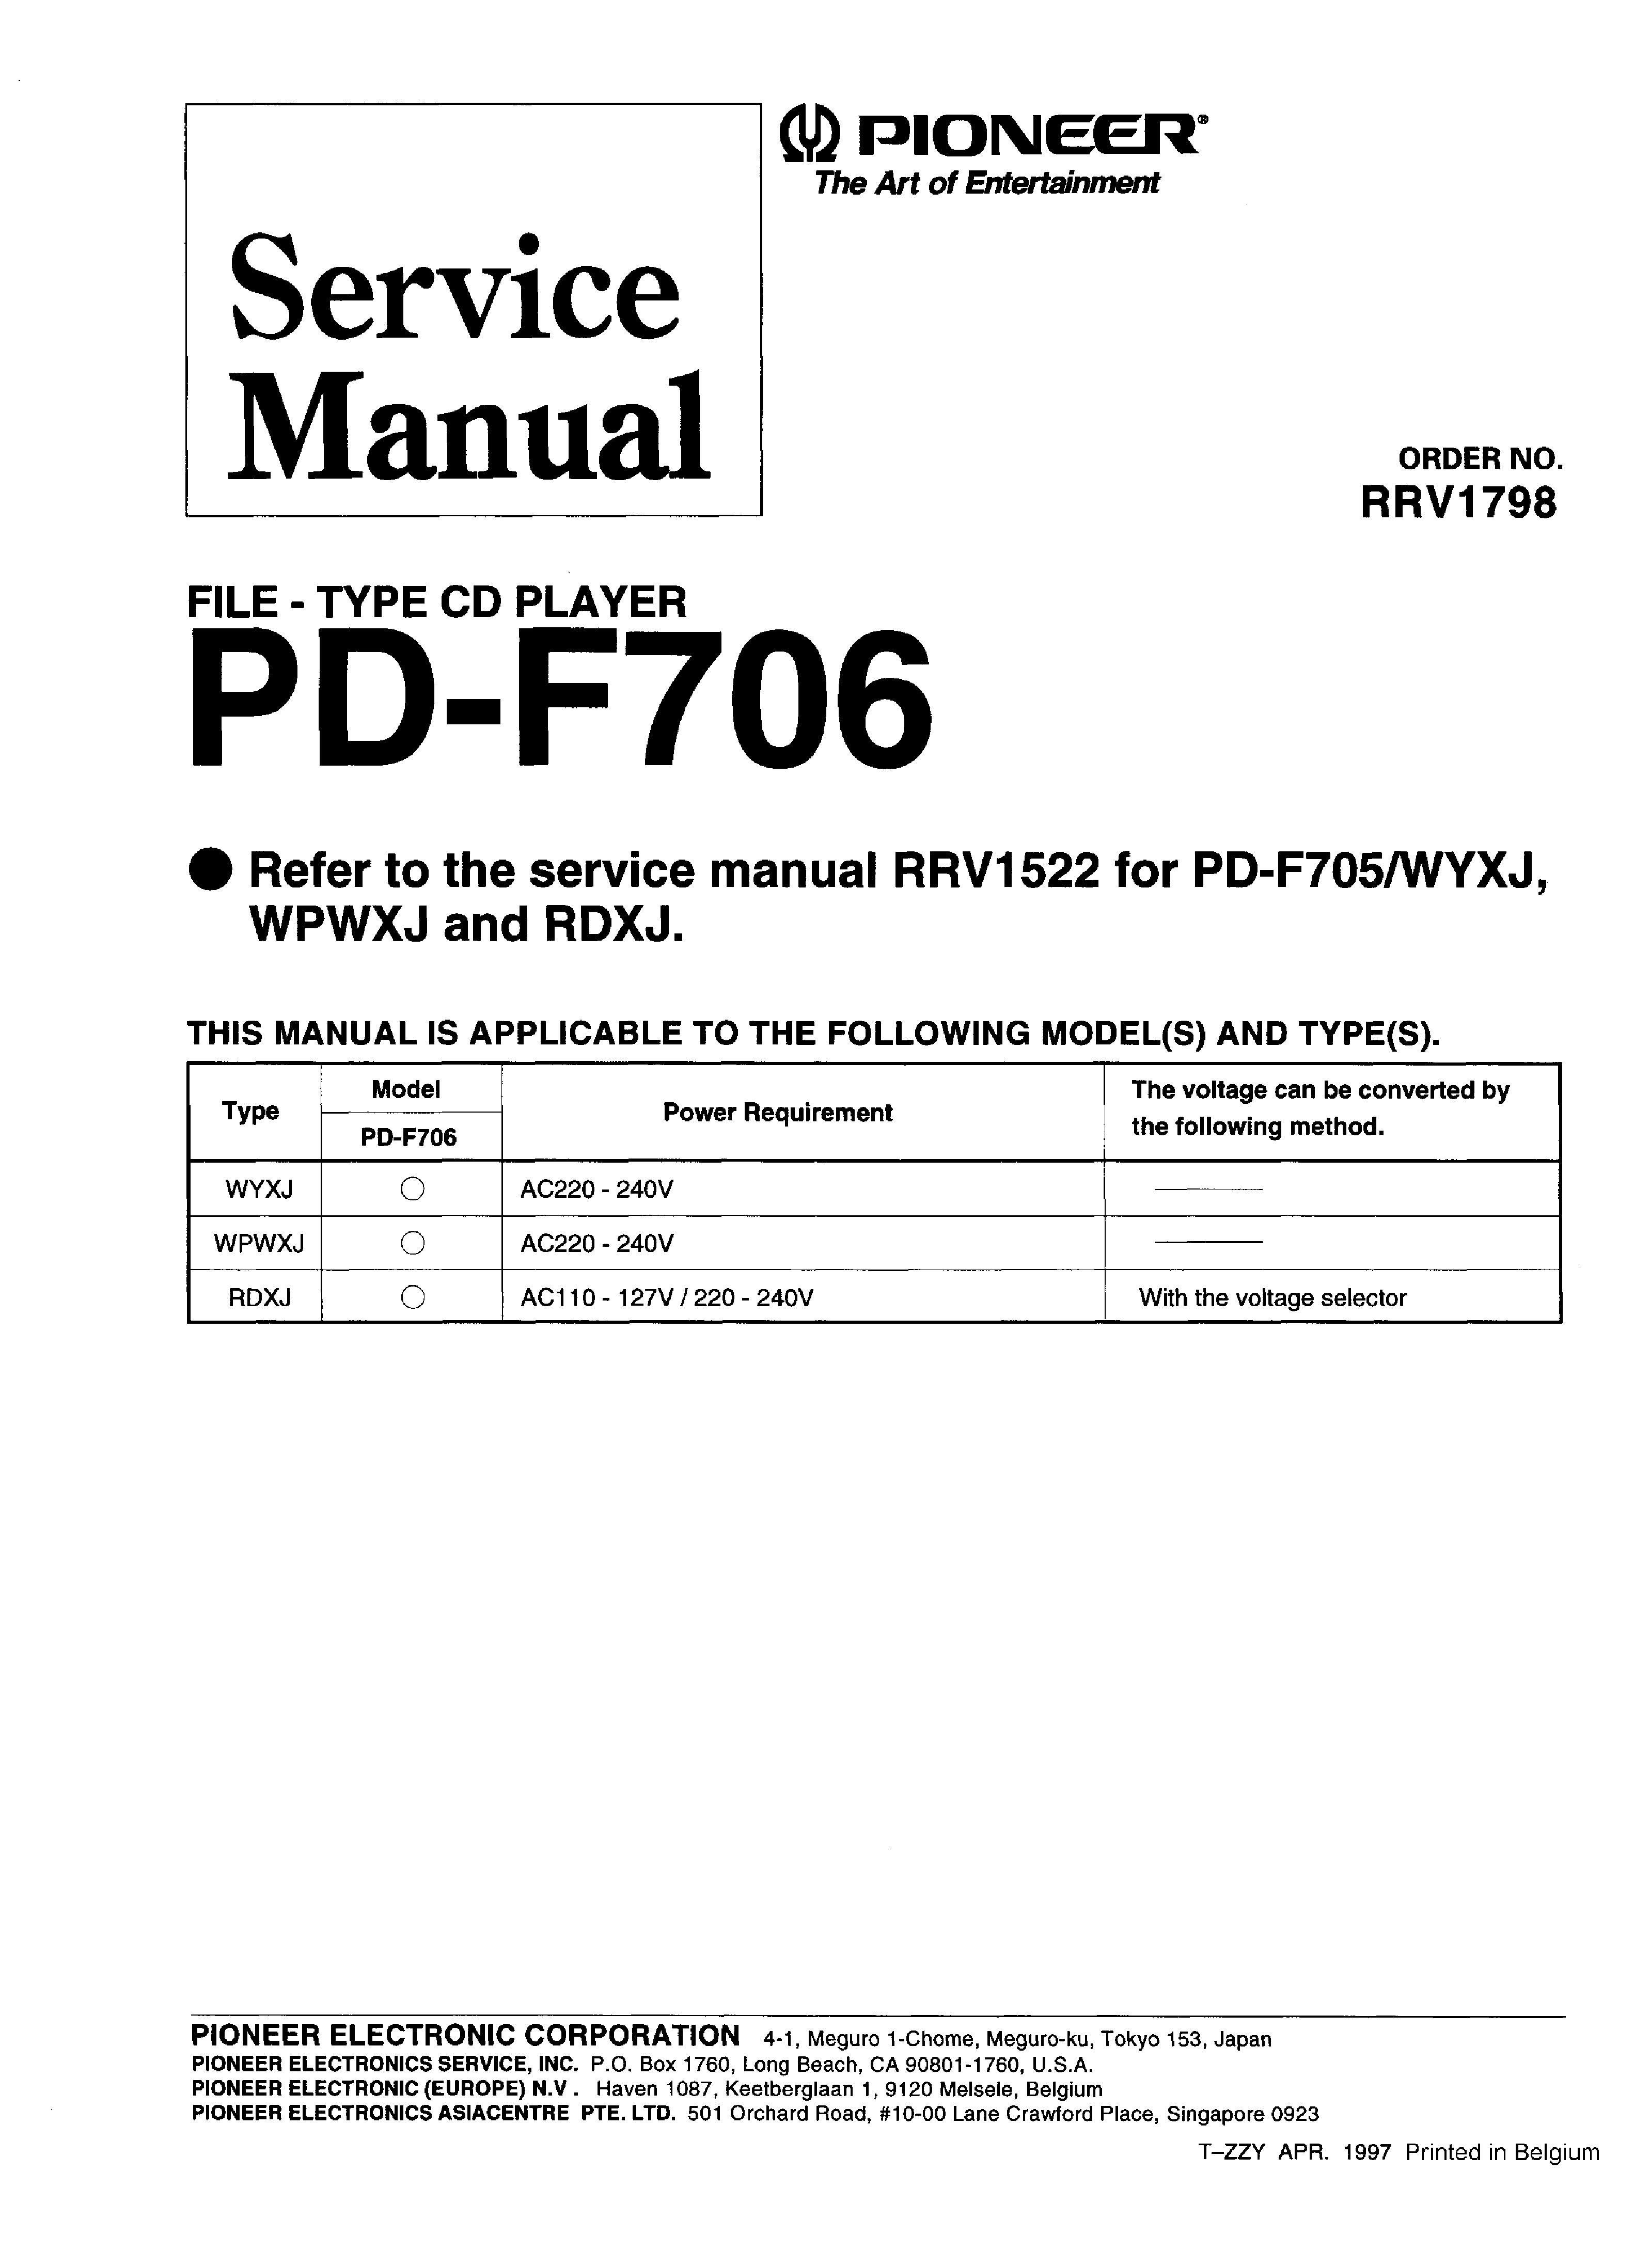 PIONEER PD-F706 RRV1798 Service Manual download, schematics, eeprom ...